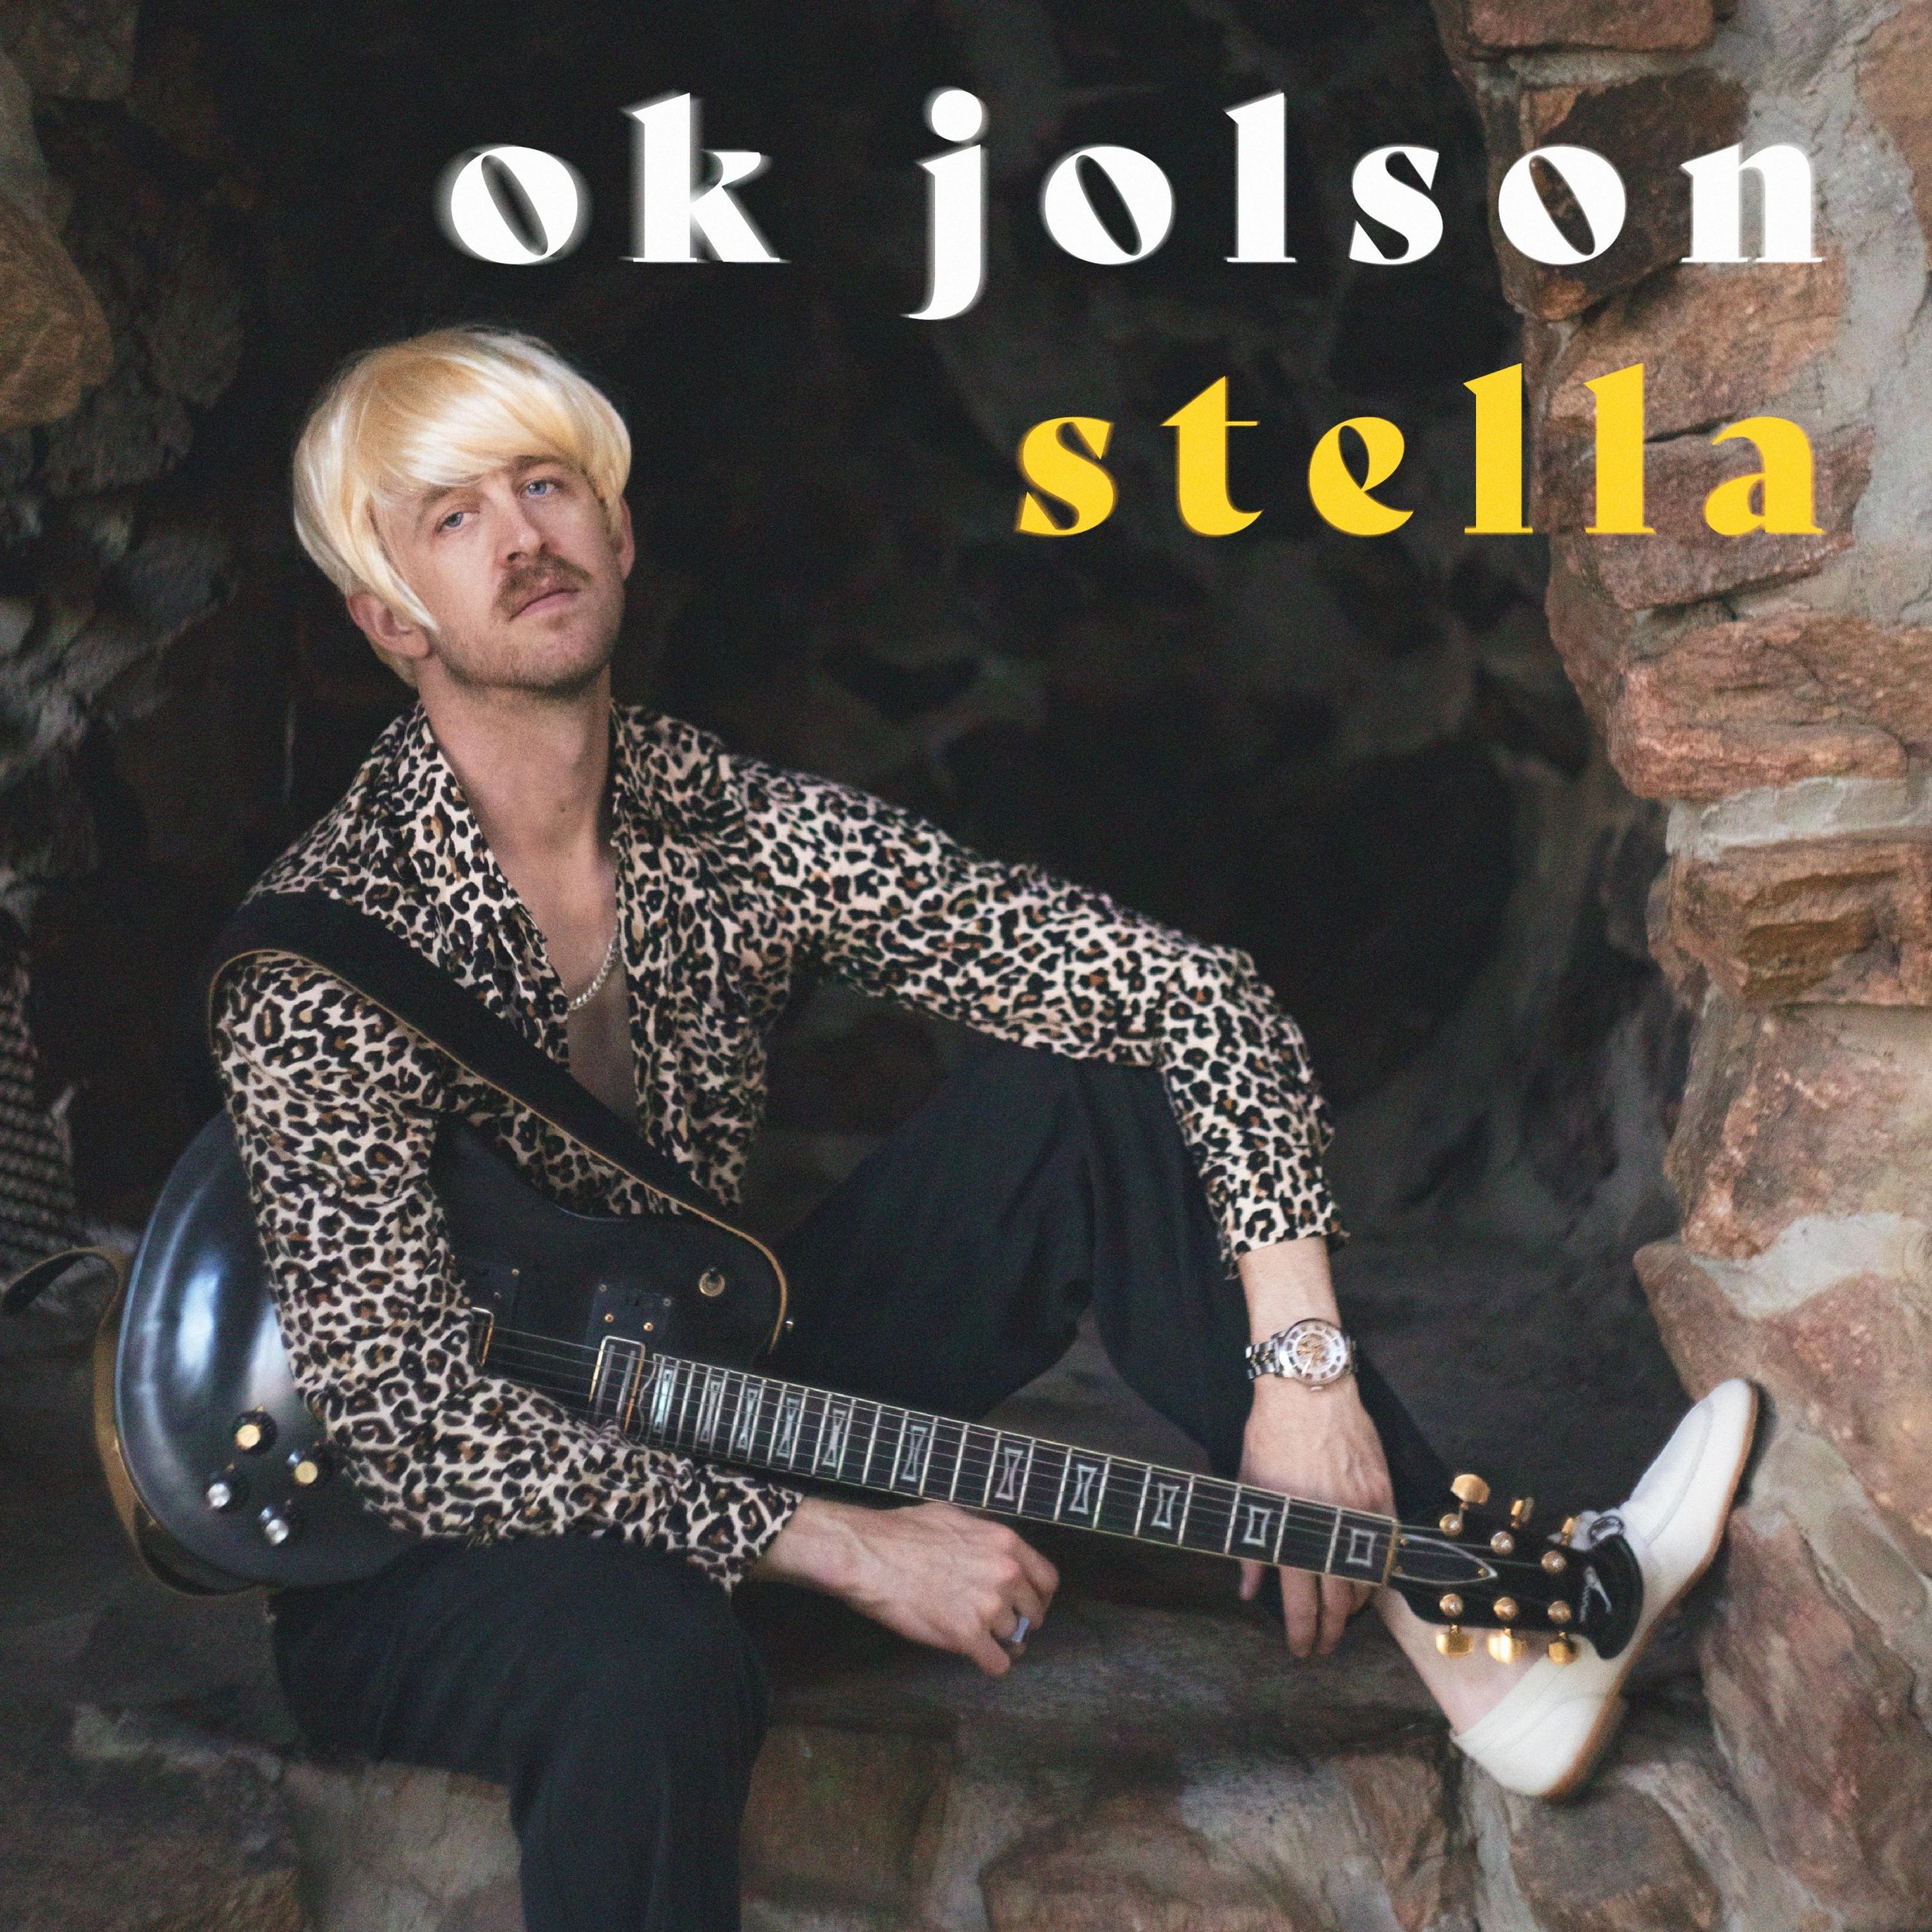 ok jolson - stella